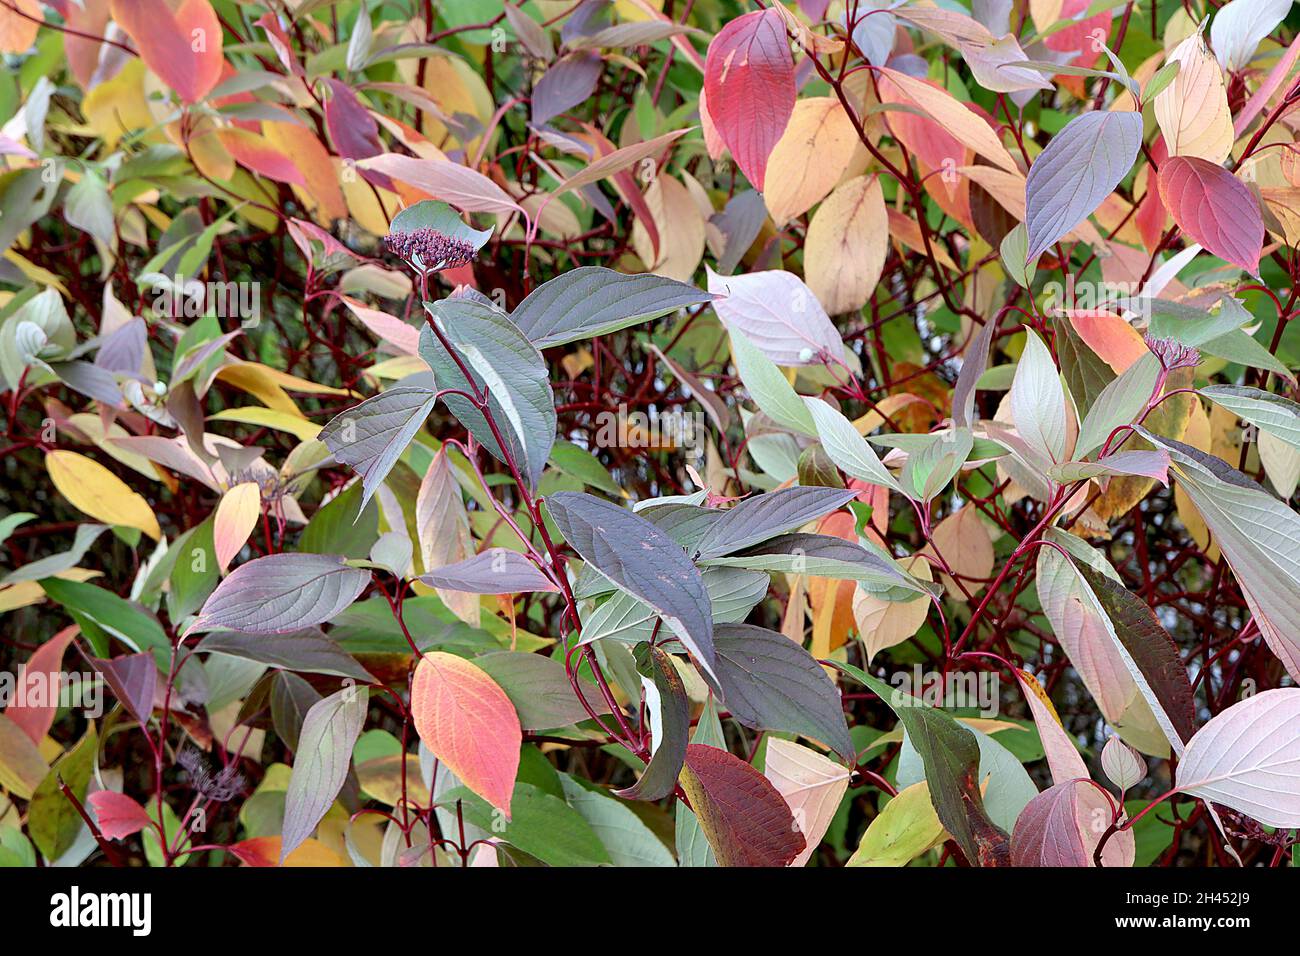 Cornus alternifolia pagoda dogwood – purple corymbs and multi-coloured leaves on dark red stems,  October, England, UK Stock Photo